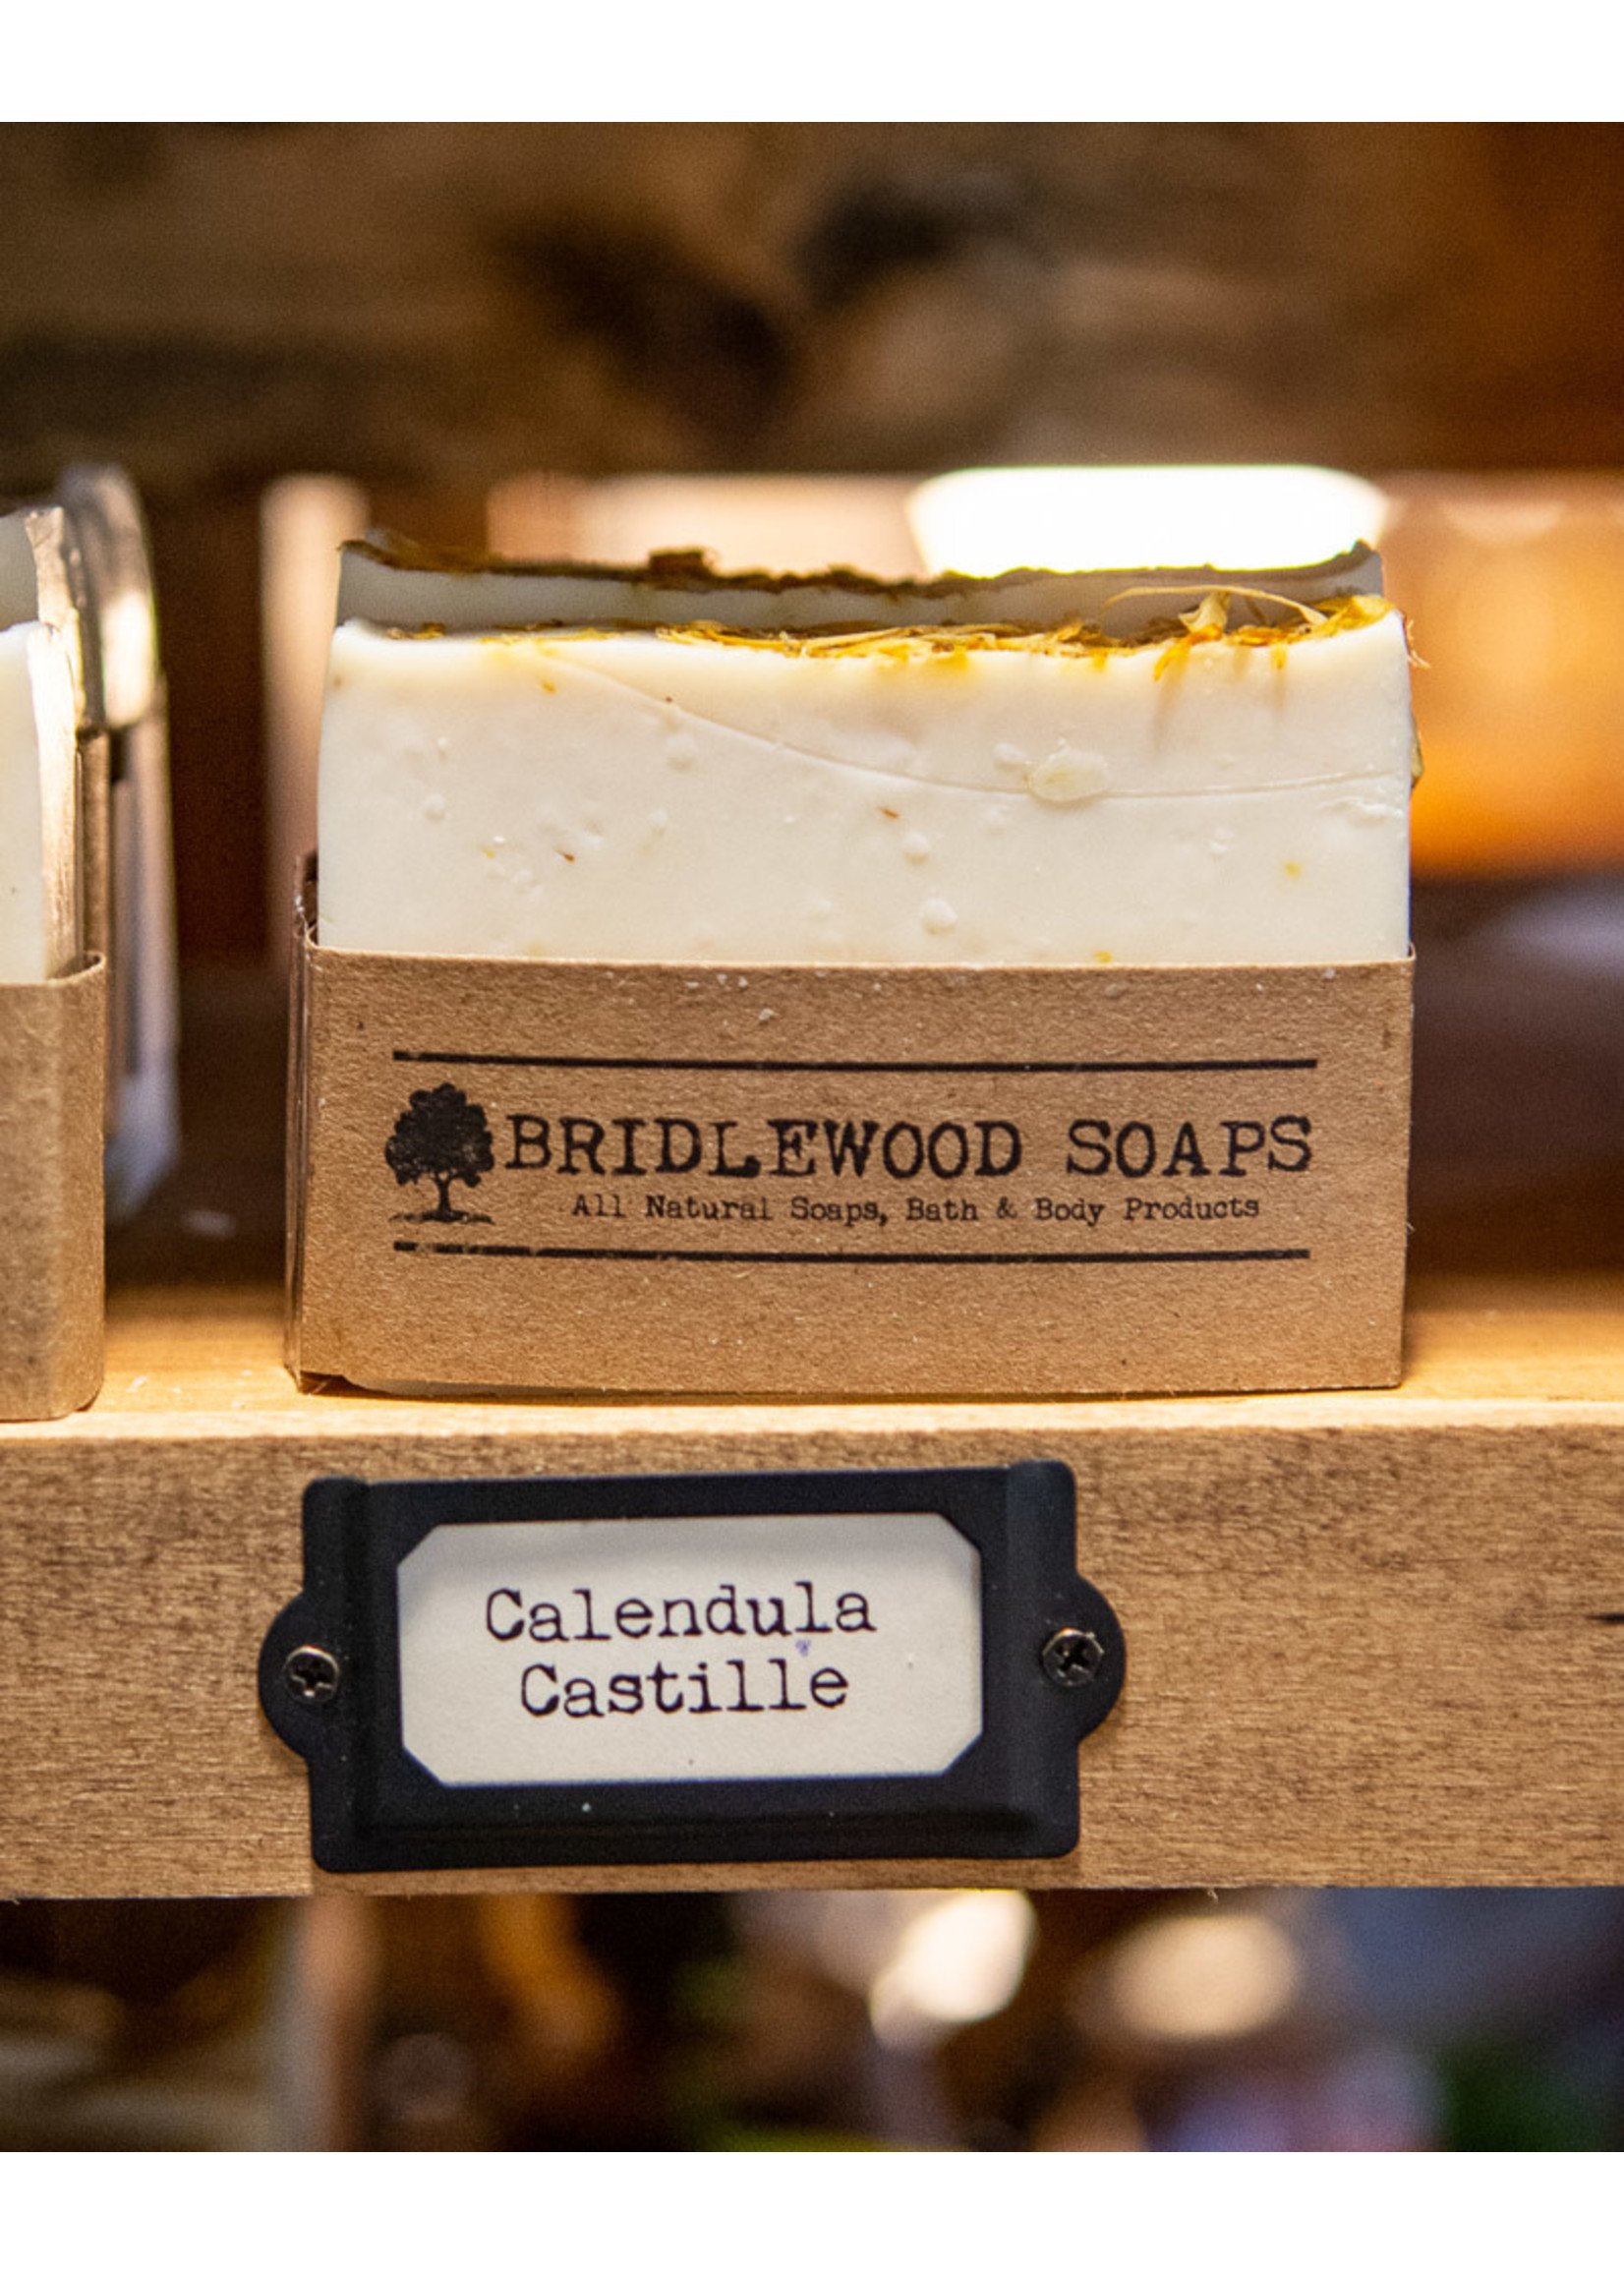 Bridlewood Soaps Calendula Castille Soap Bar